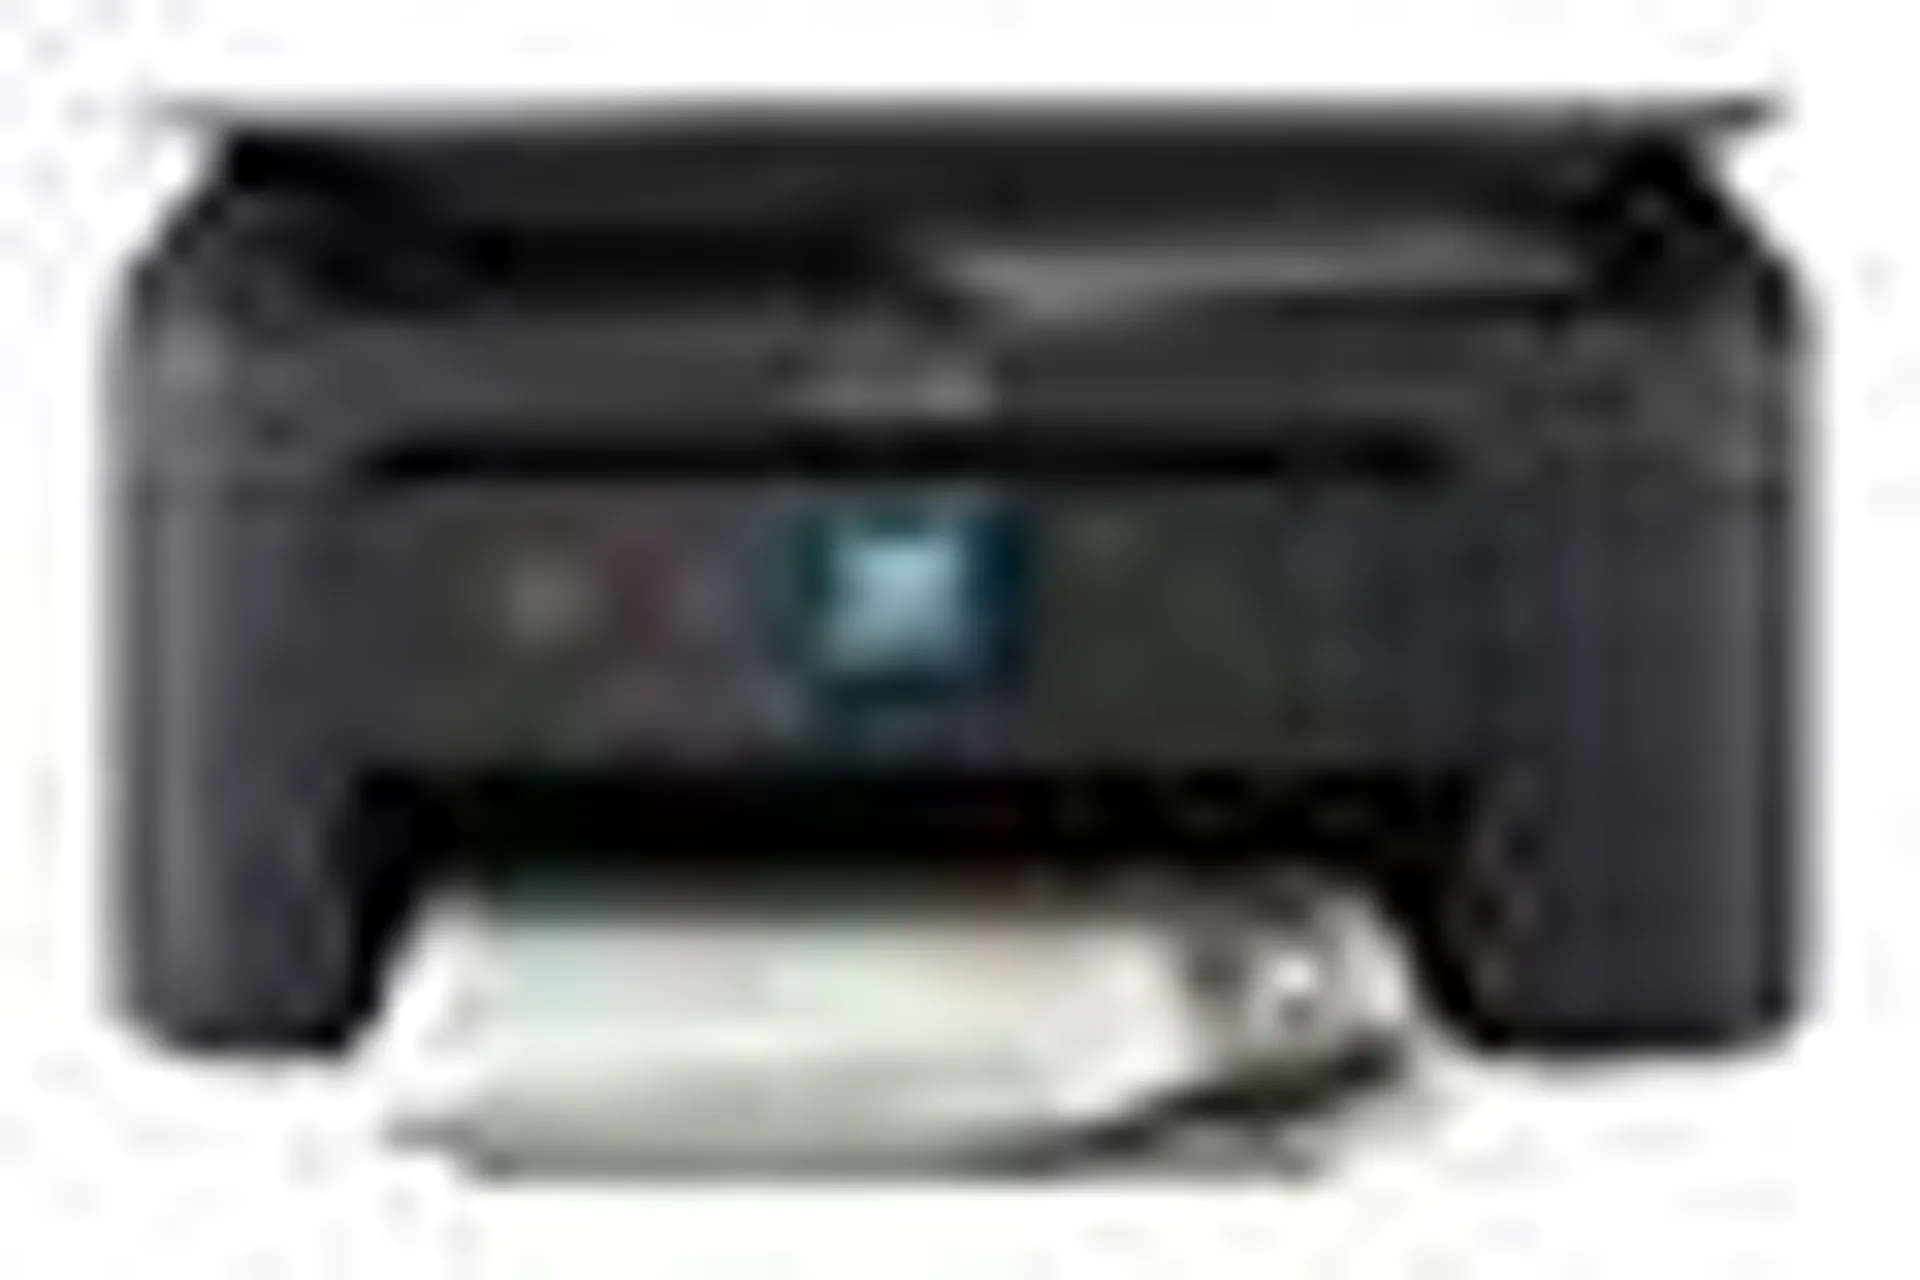 Epson Expression Home Printer | XP-3200